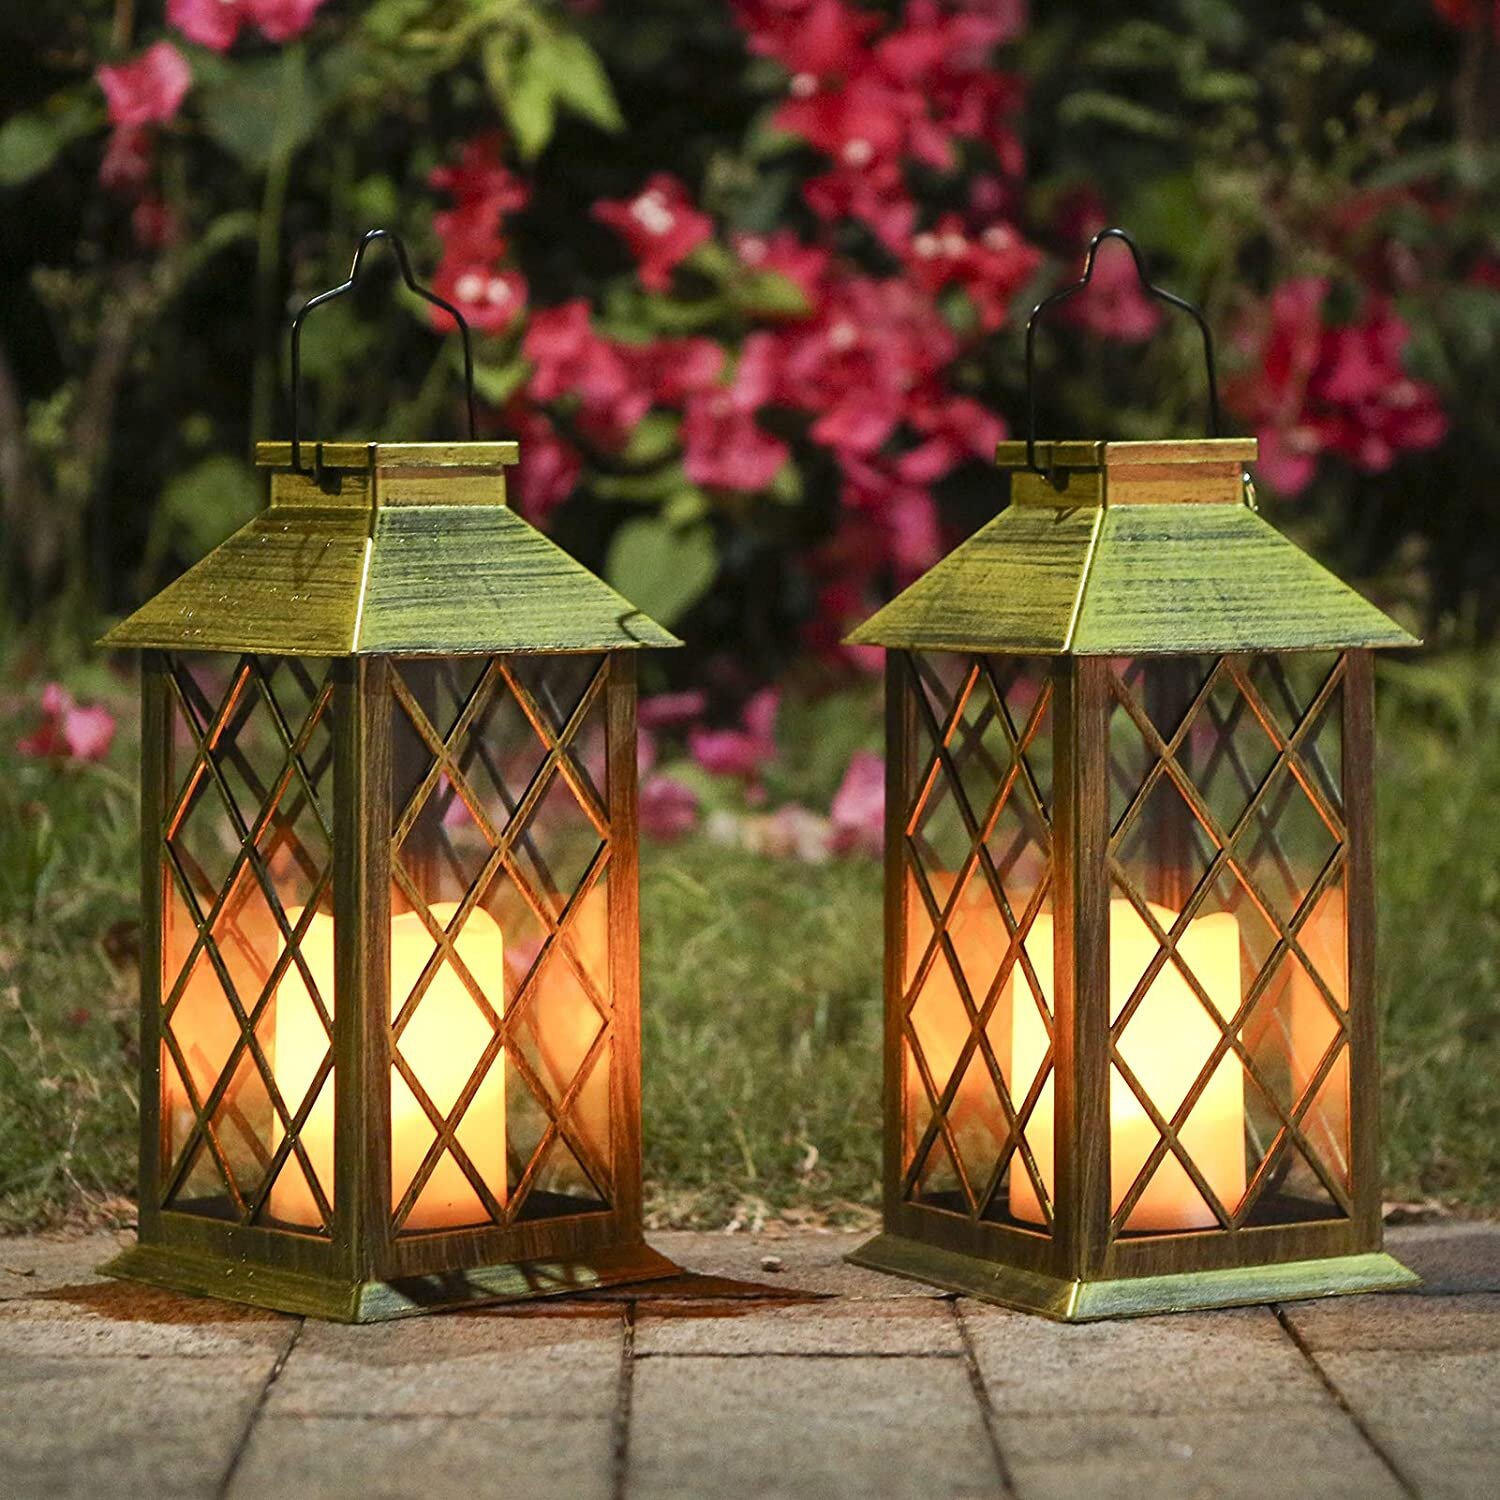 Solar Power LED Candle Warm Light Lantern Hanging Garden Outdoor Indoor Lamp US 